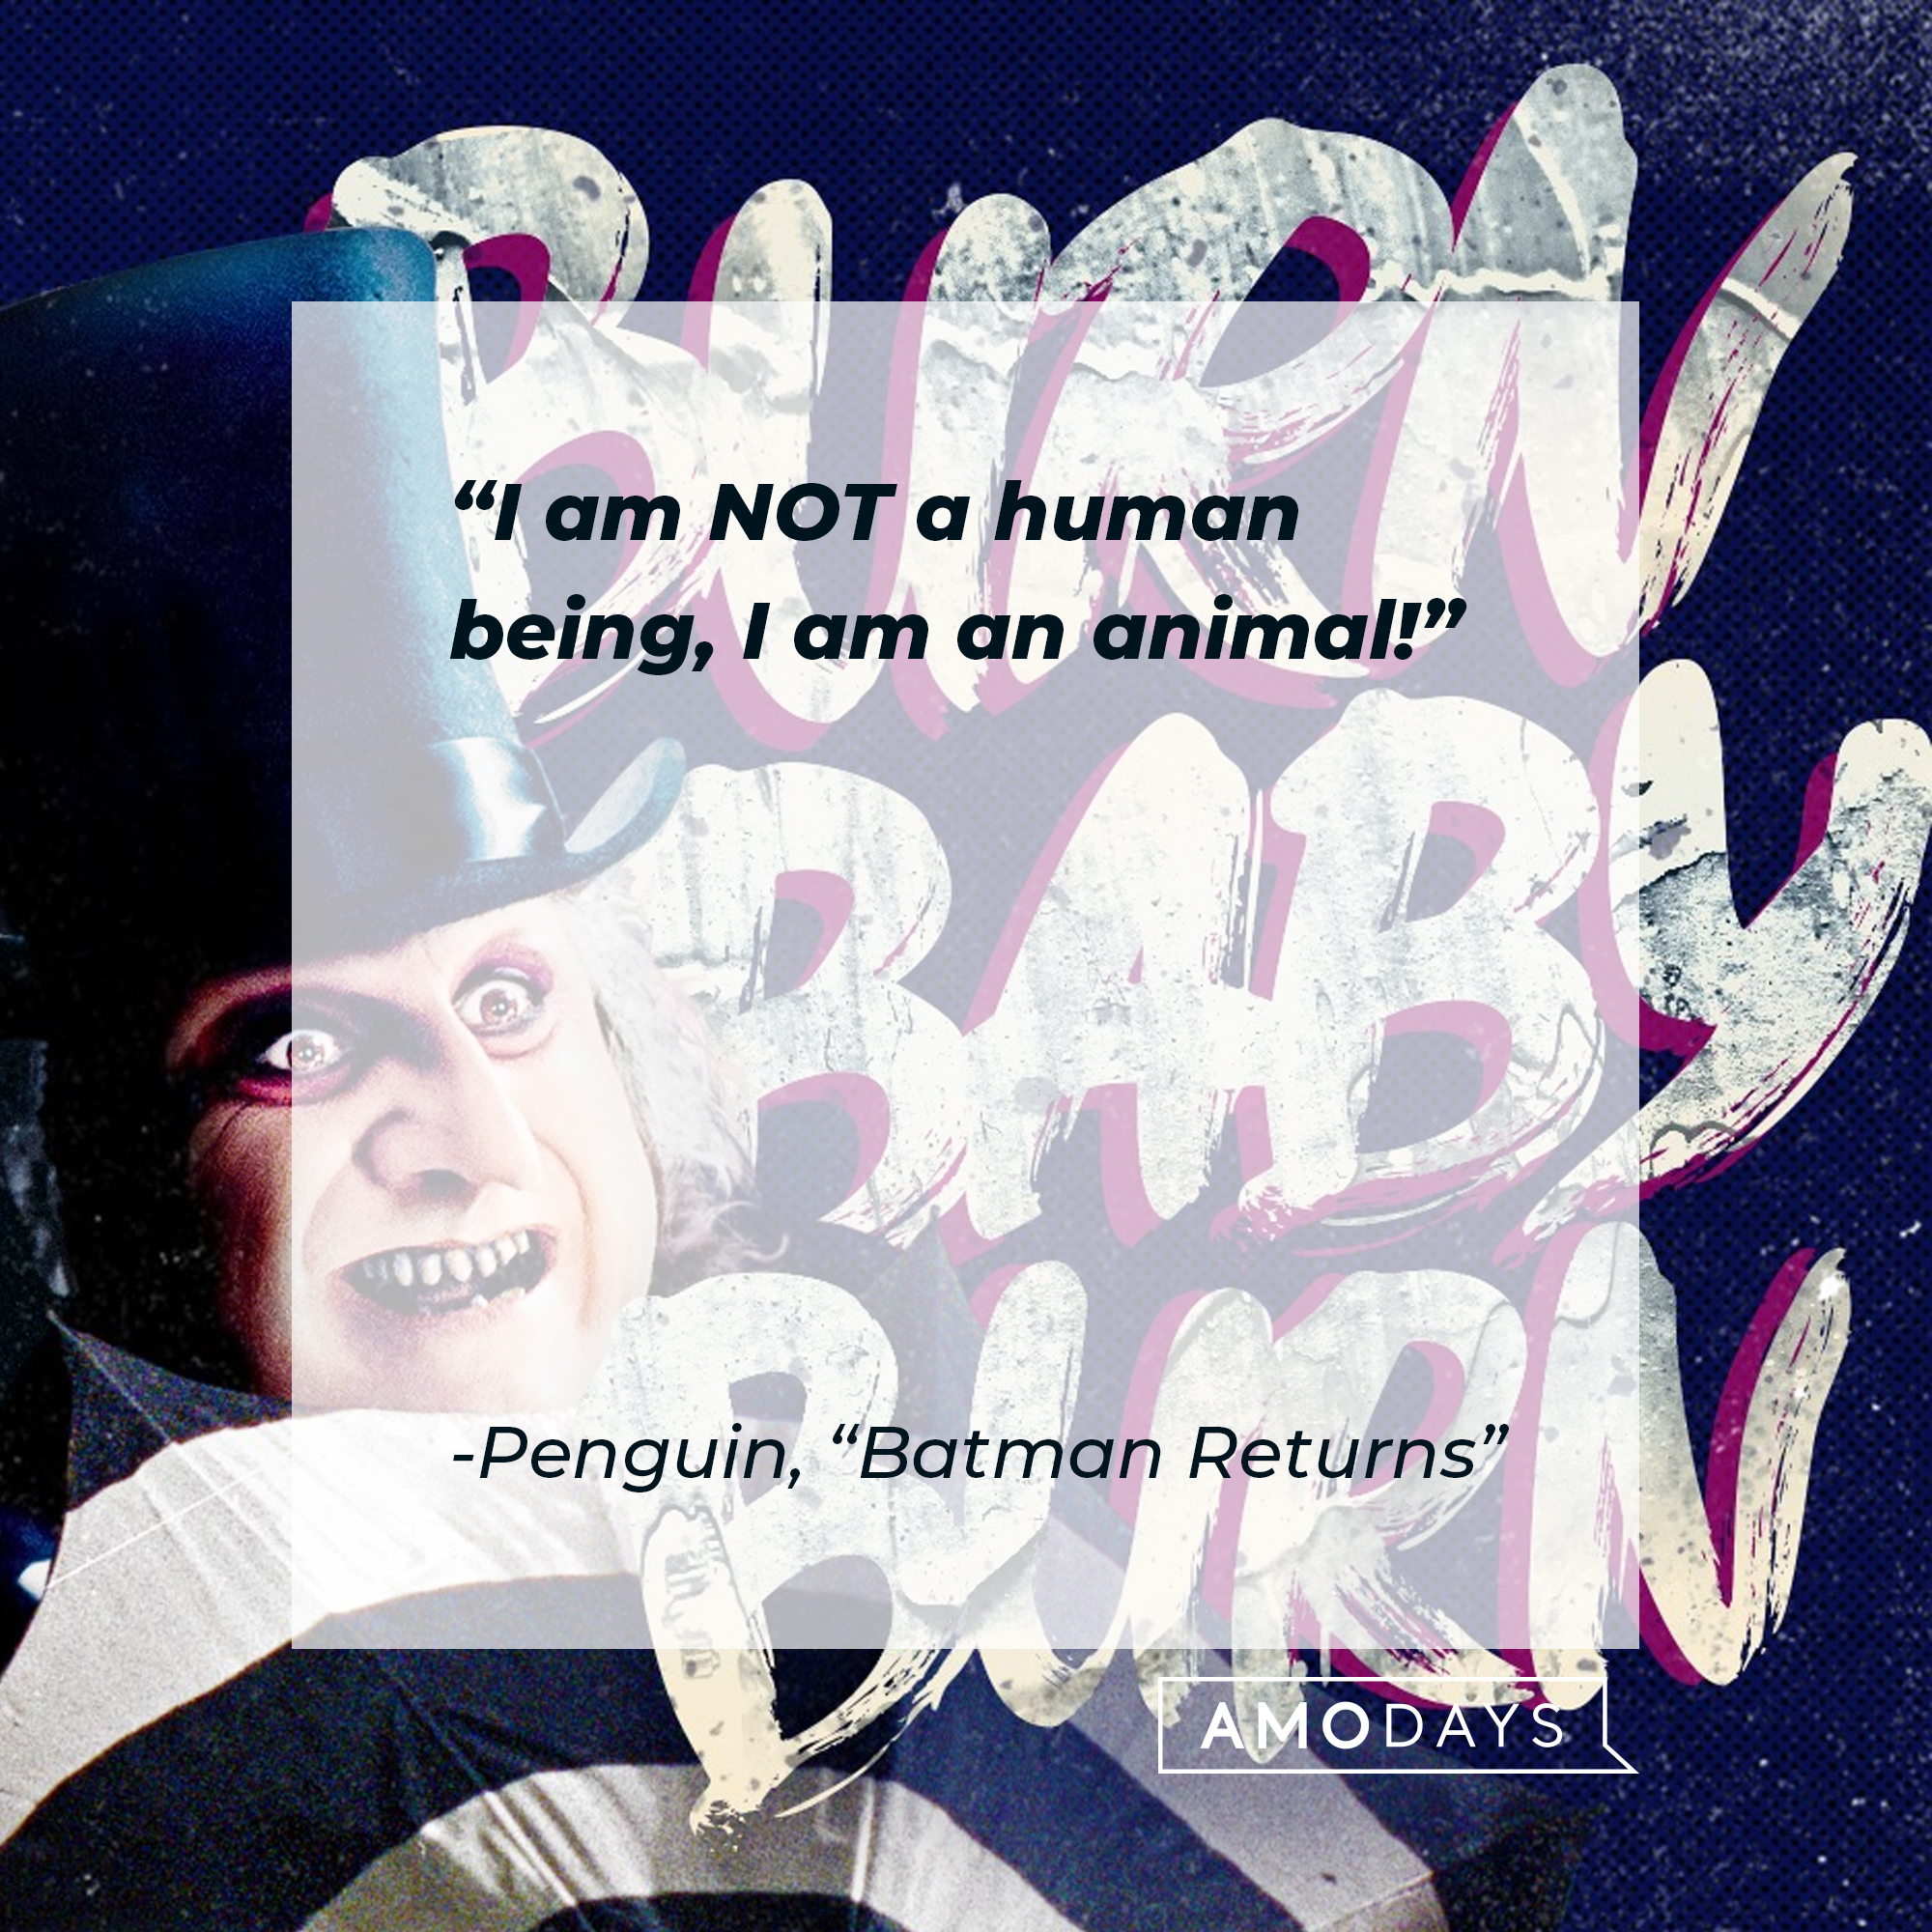 Penguin's quote from "Batman Returns" : "I am NOT a human being, I am an animal!" | Source: facebook.com/BatmanReturnsFilm